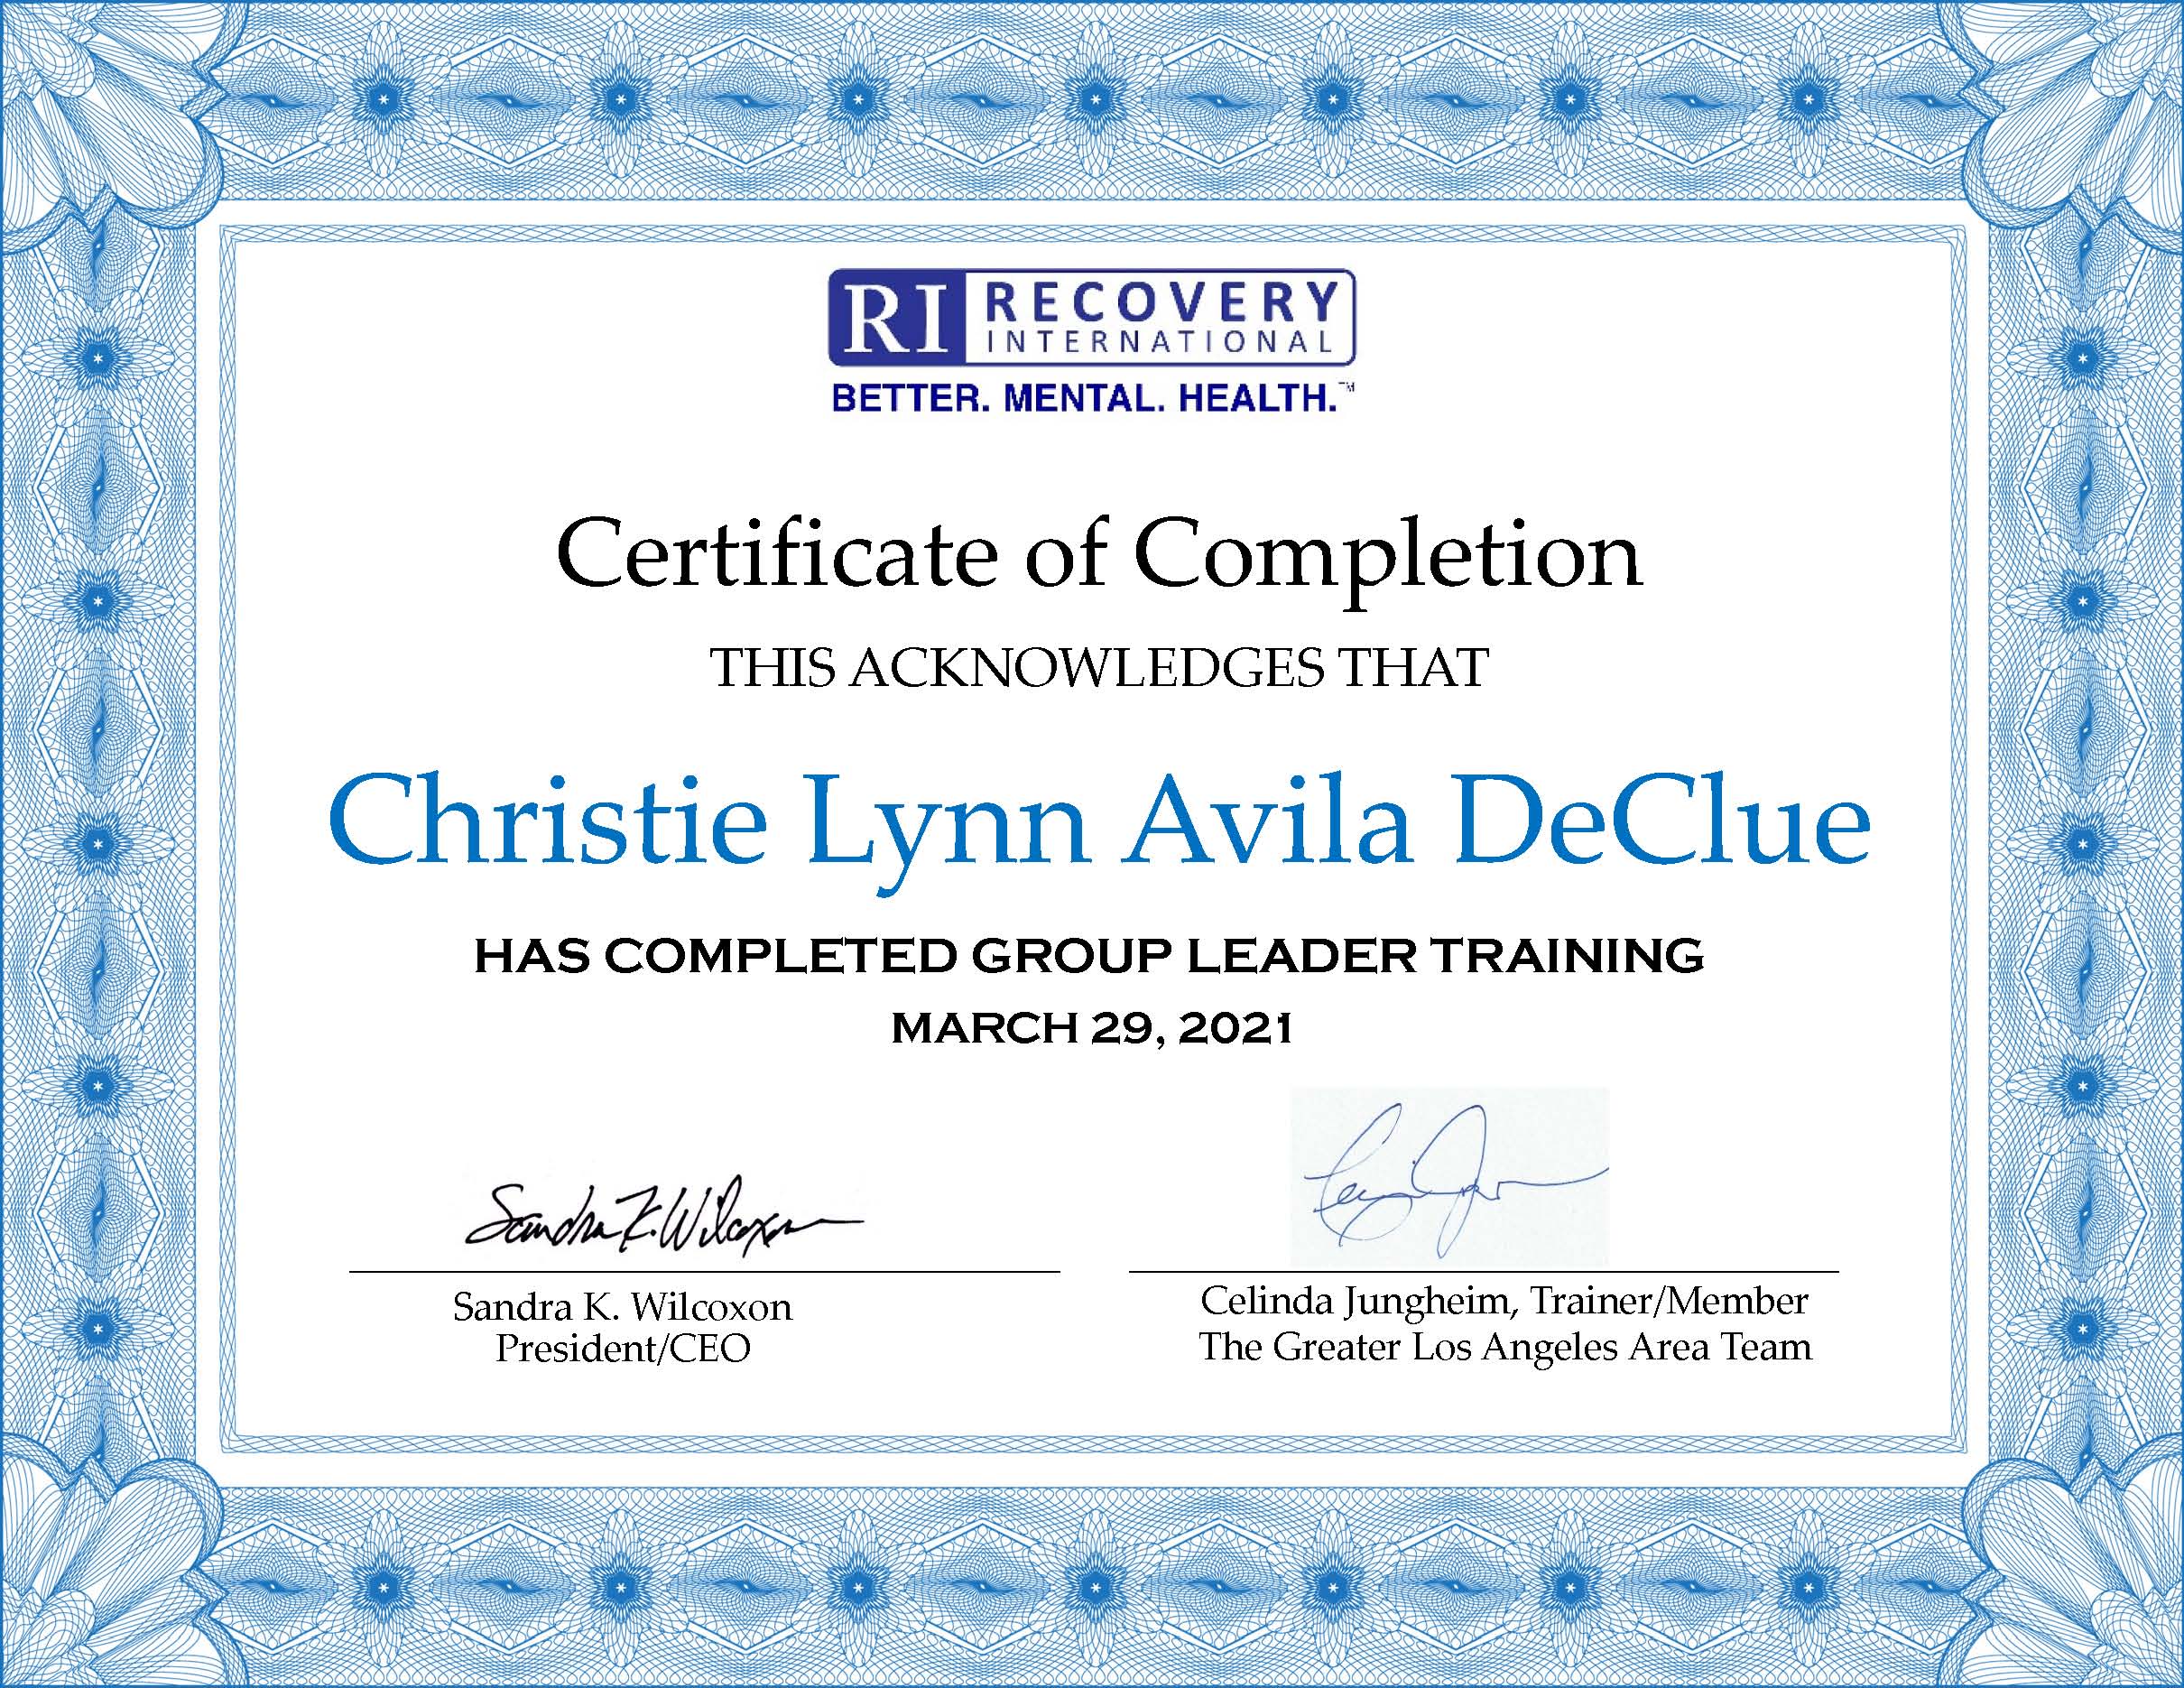 Christie Lynn Avila DeClue certificate